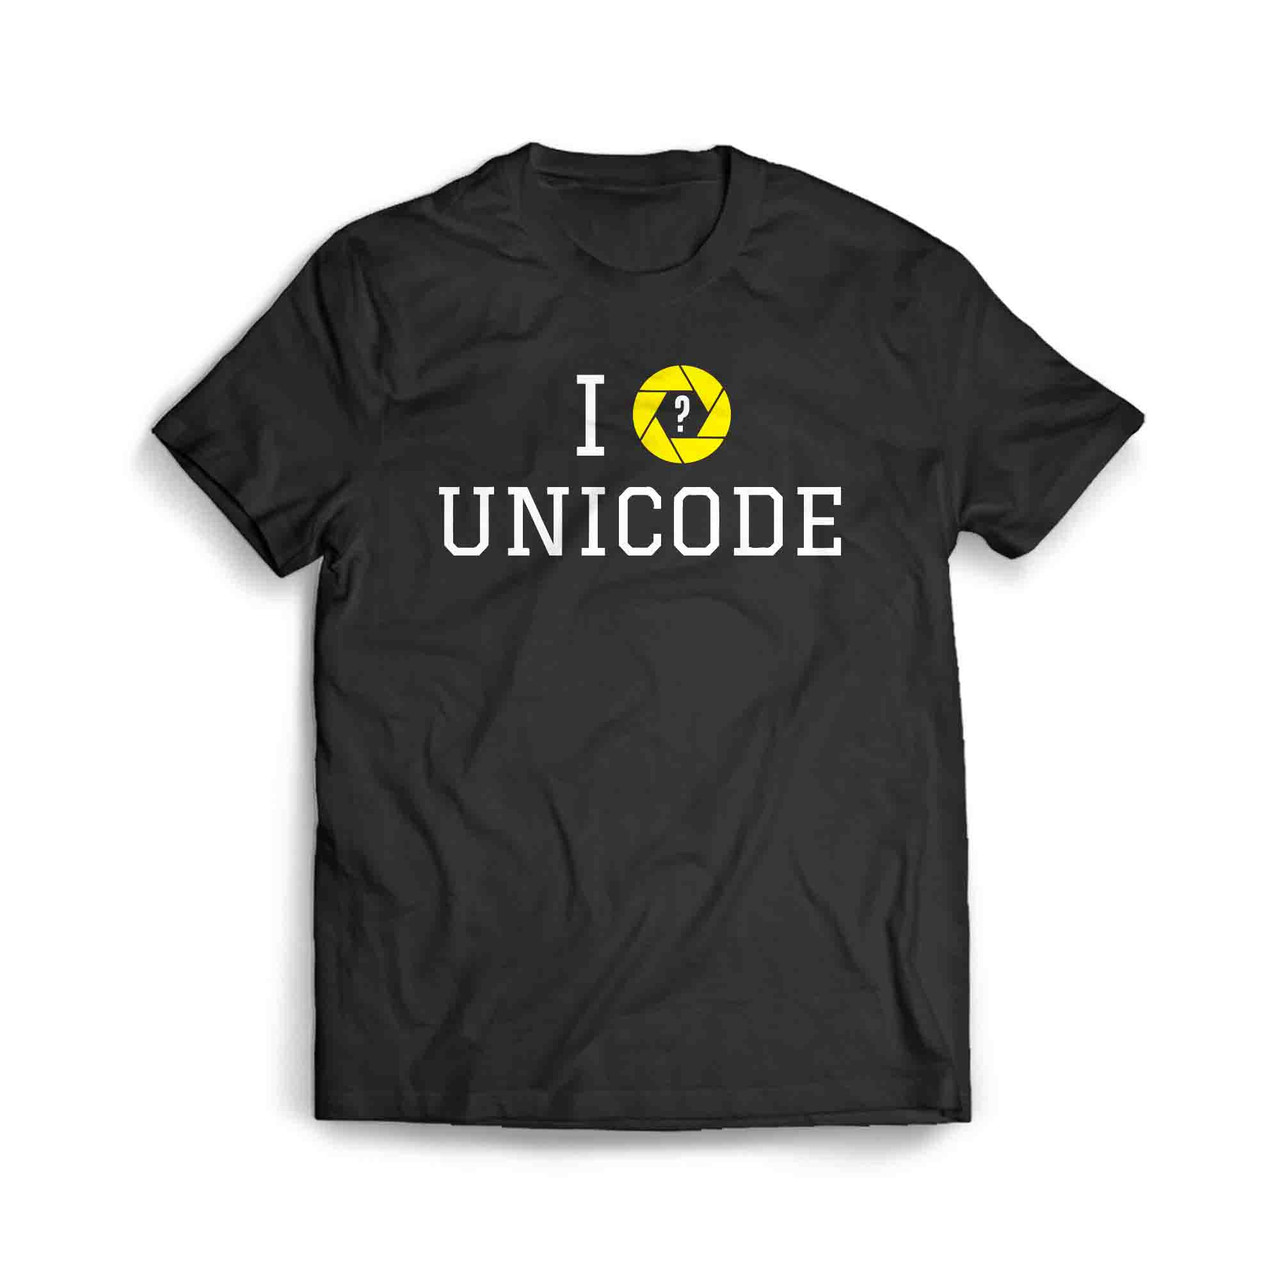 I Unicode 2 Men's T-Shirt